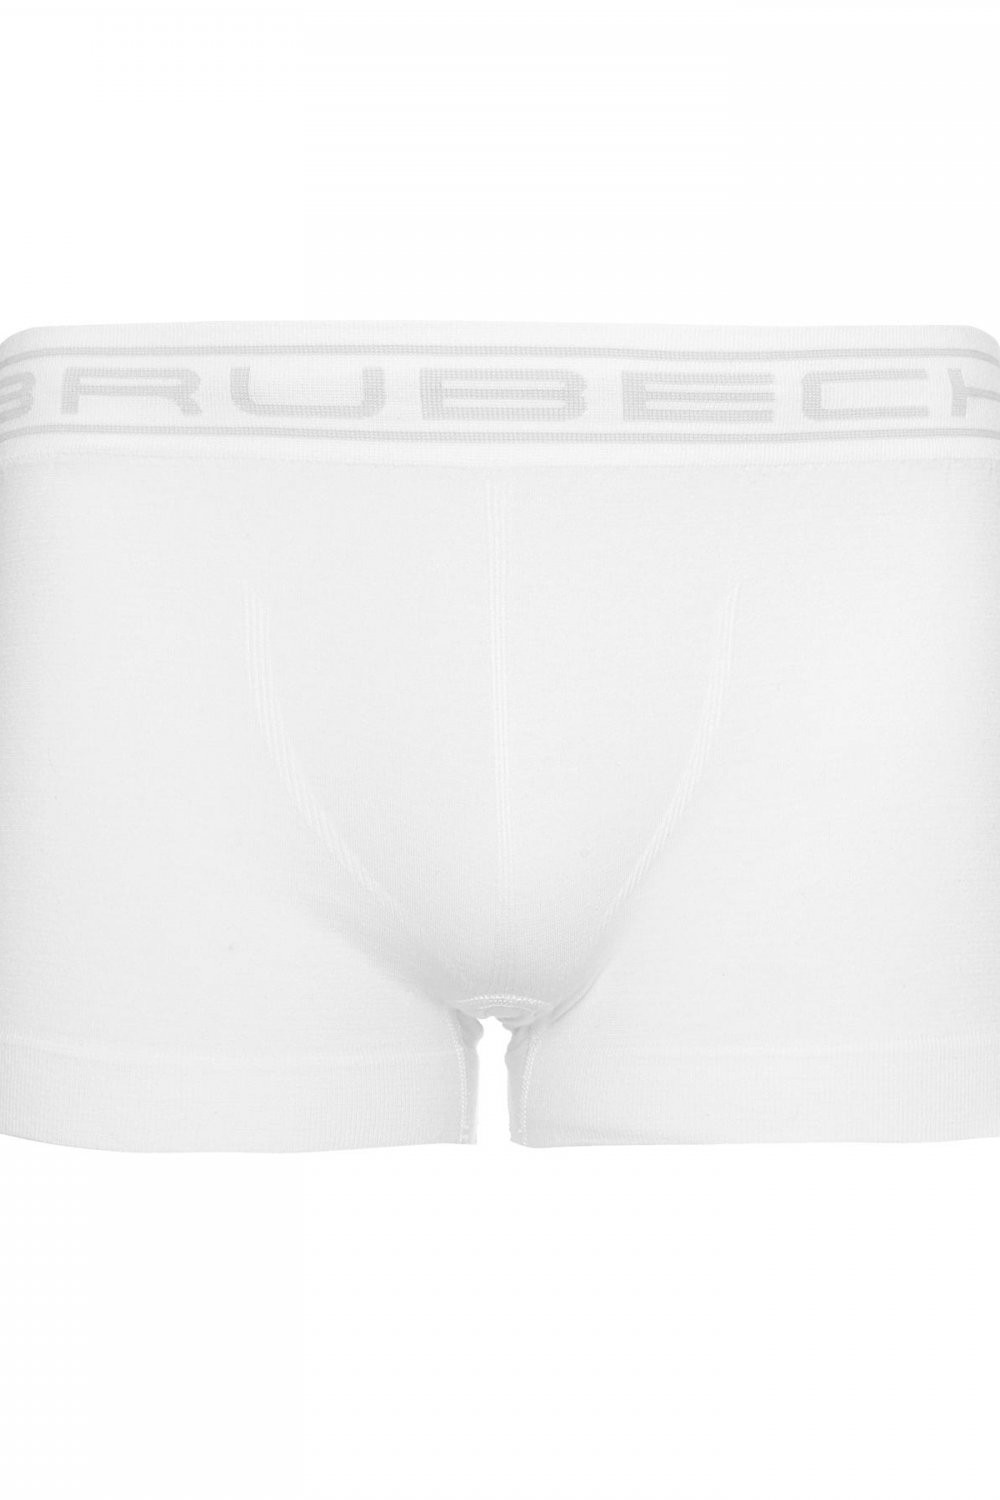 Pánské boxerky model 16247163 white - Brubeck Barva: Bílá, Velikost: XL